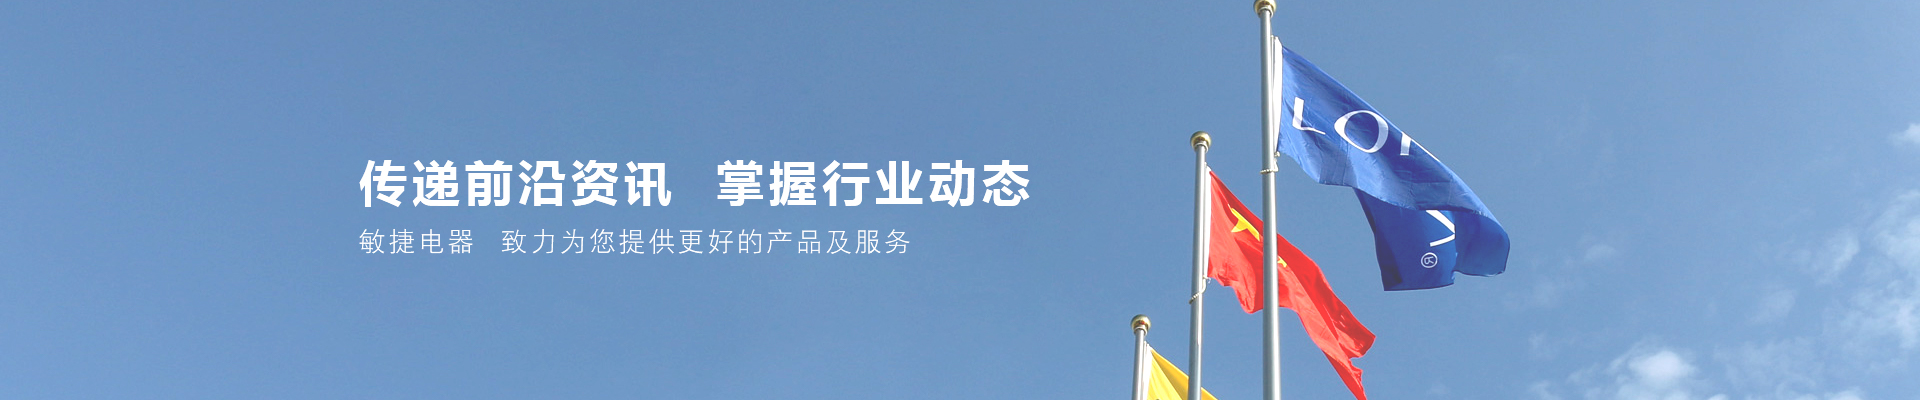 敏捷電器(qì)banner